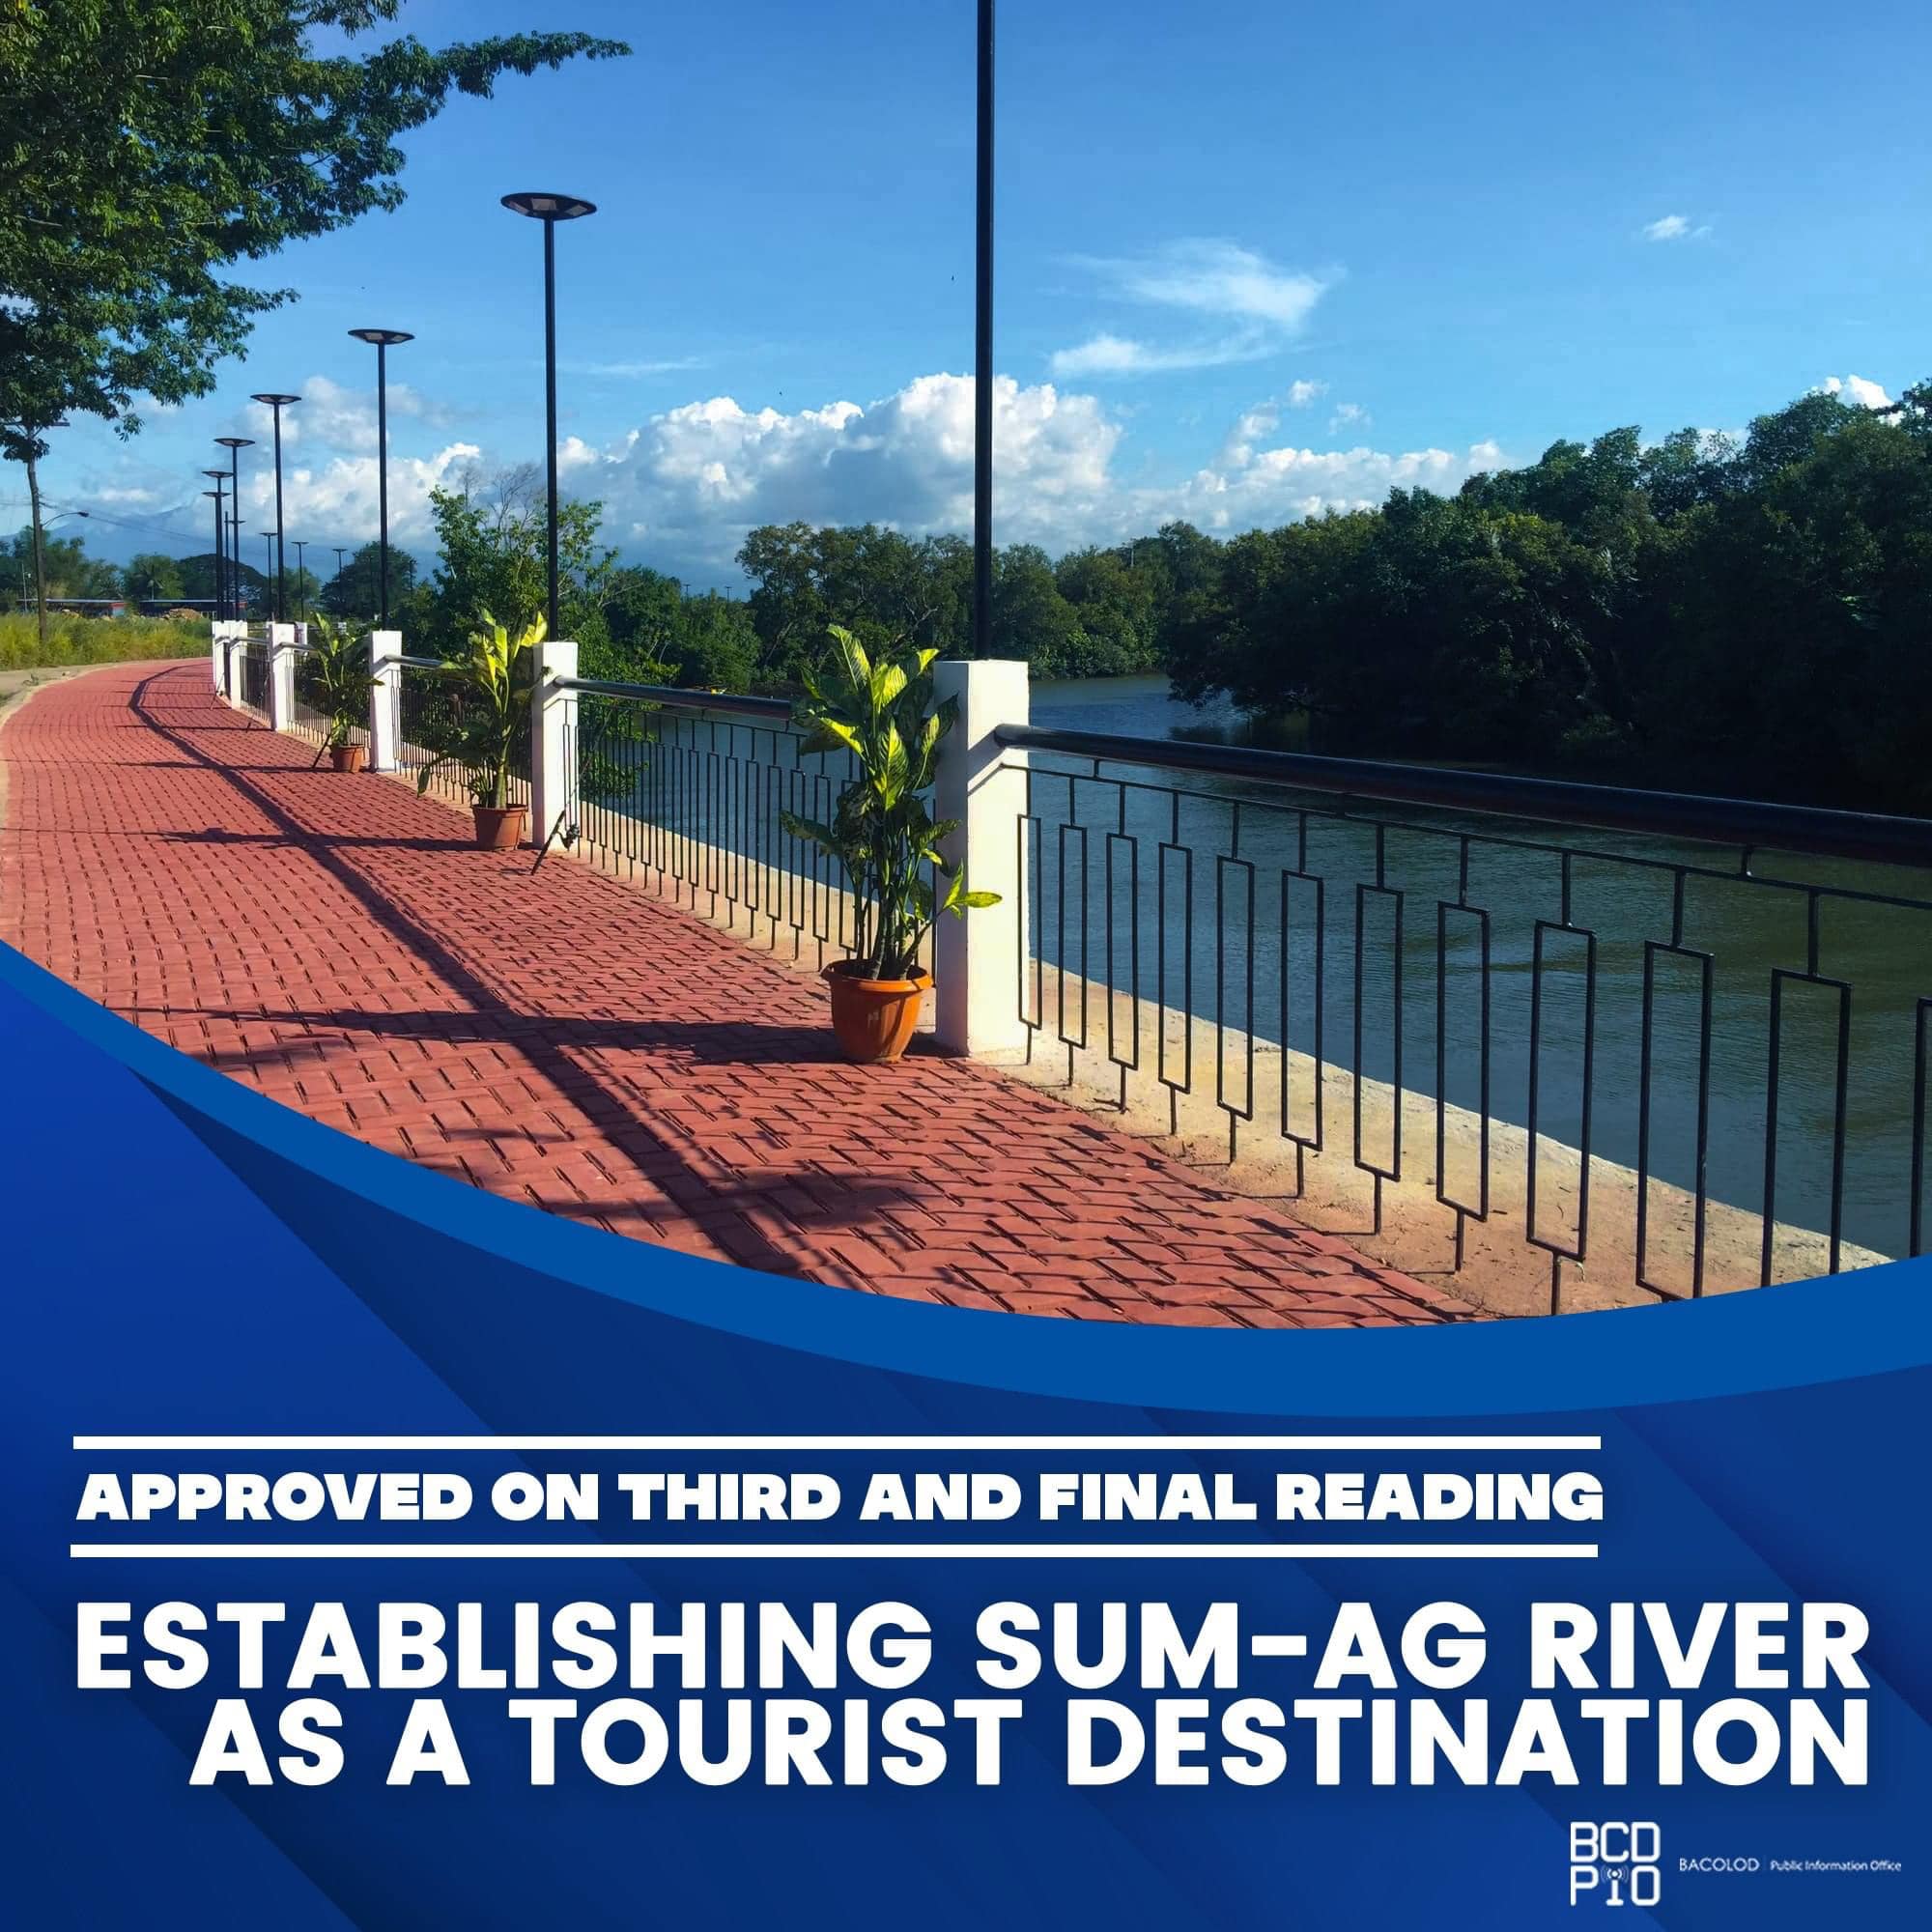 SP APPROVED, SUM-AG RIVER AS BACOLOD TOURIST DESTINATION – Authored by Councilor Jude Thaddeus “Thaddy” Sayson & Jason Sepe Villarosa